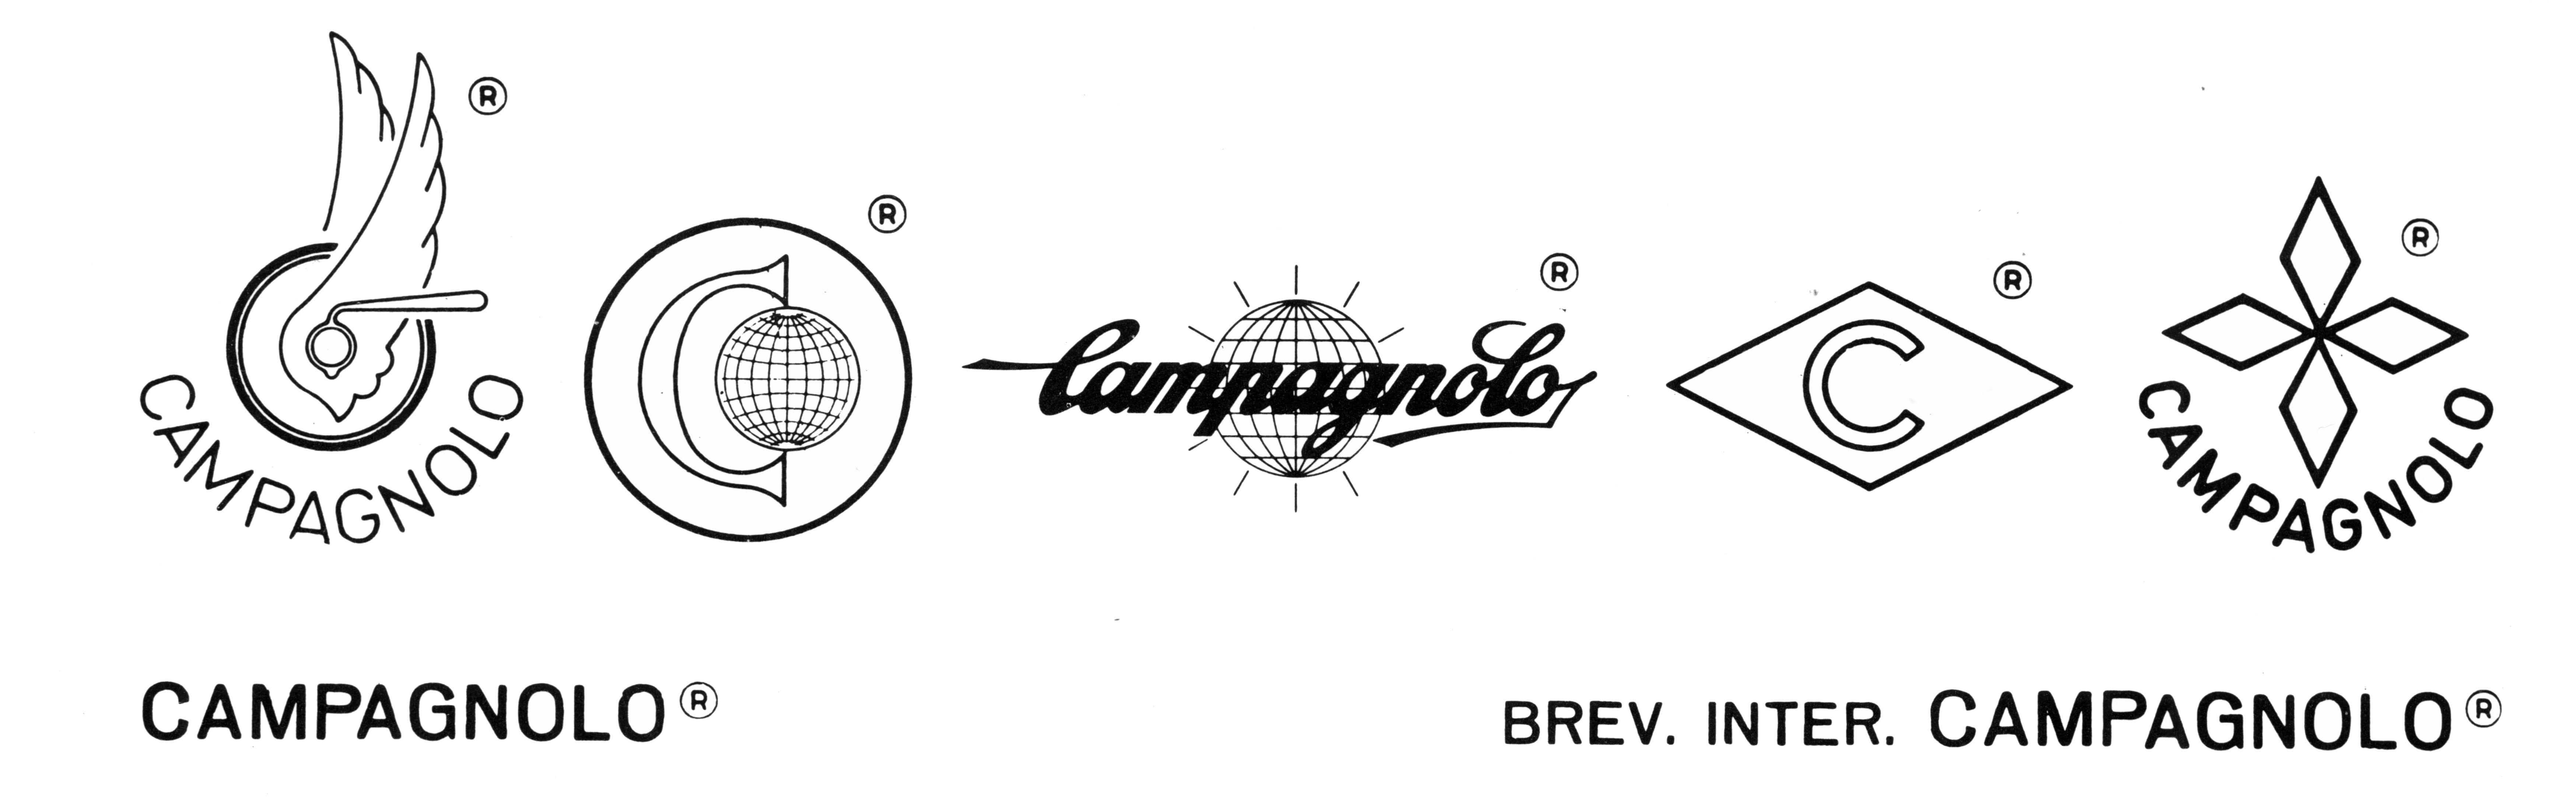 Vintage Globe Logo - Campagnolo logo is not ..... - Bike Forums